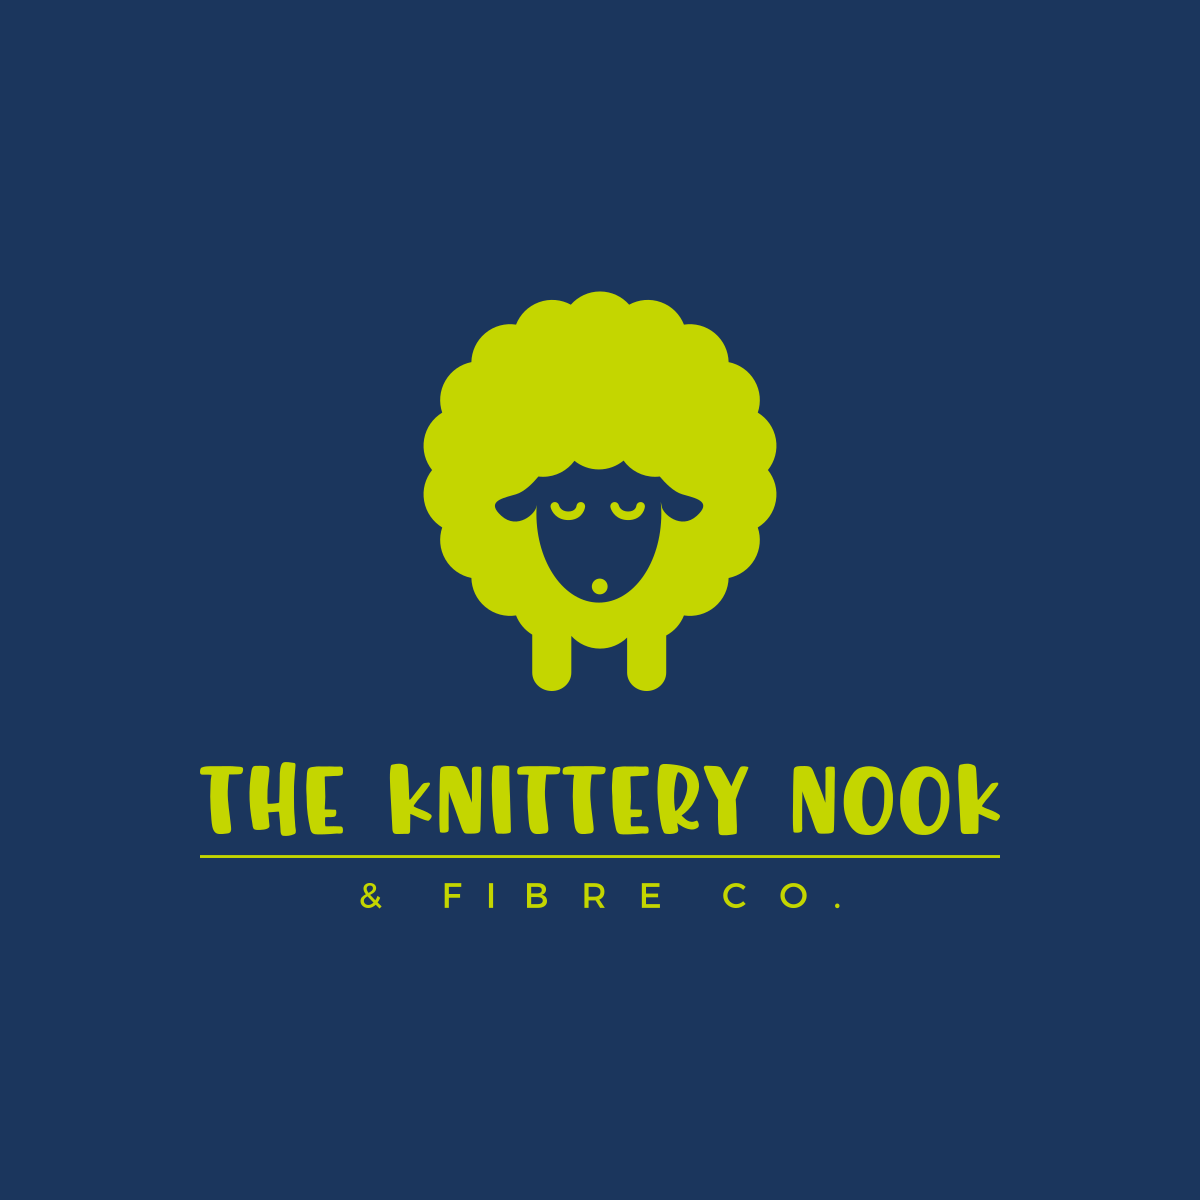 The Knittery Nook & Fibre Co. 